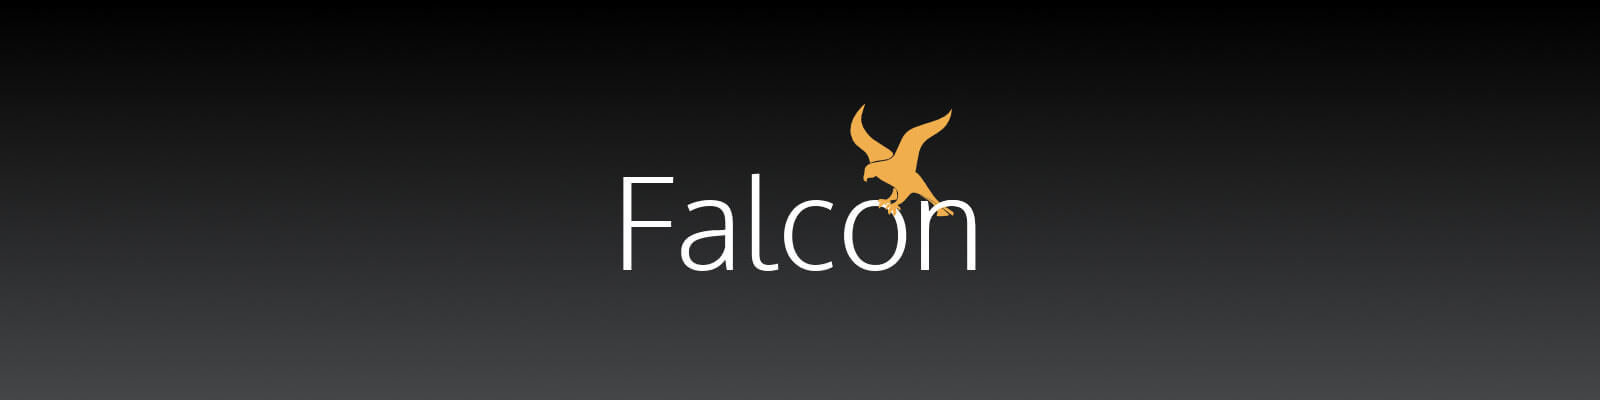 Falcon web framework logo